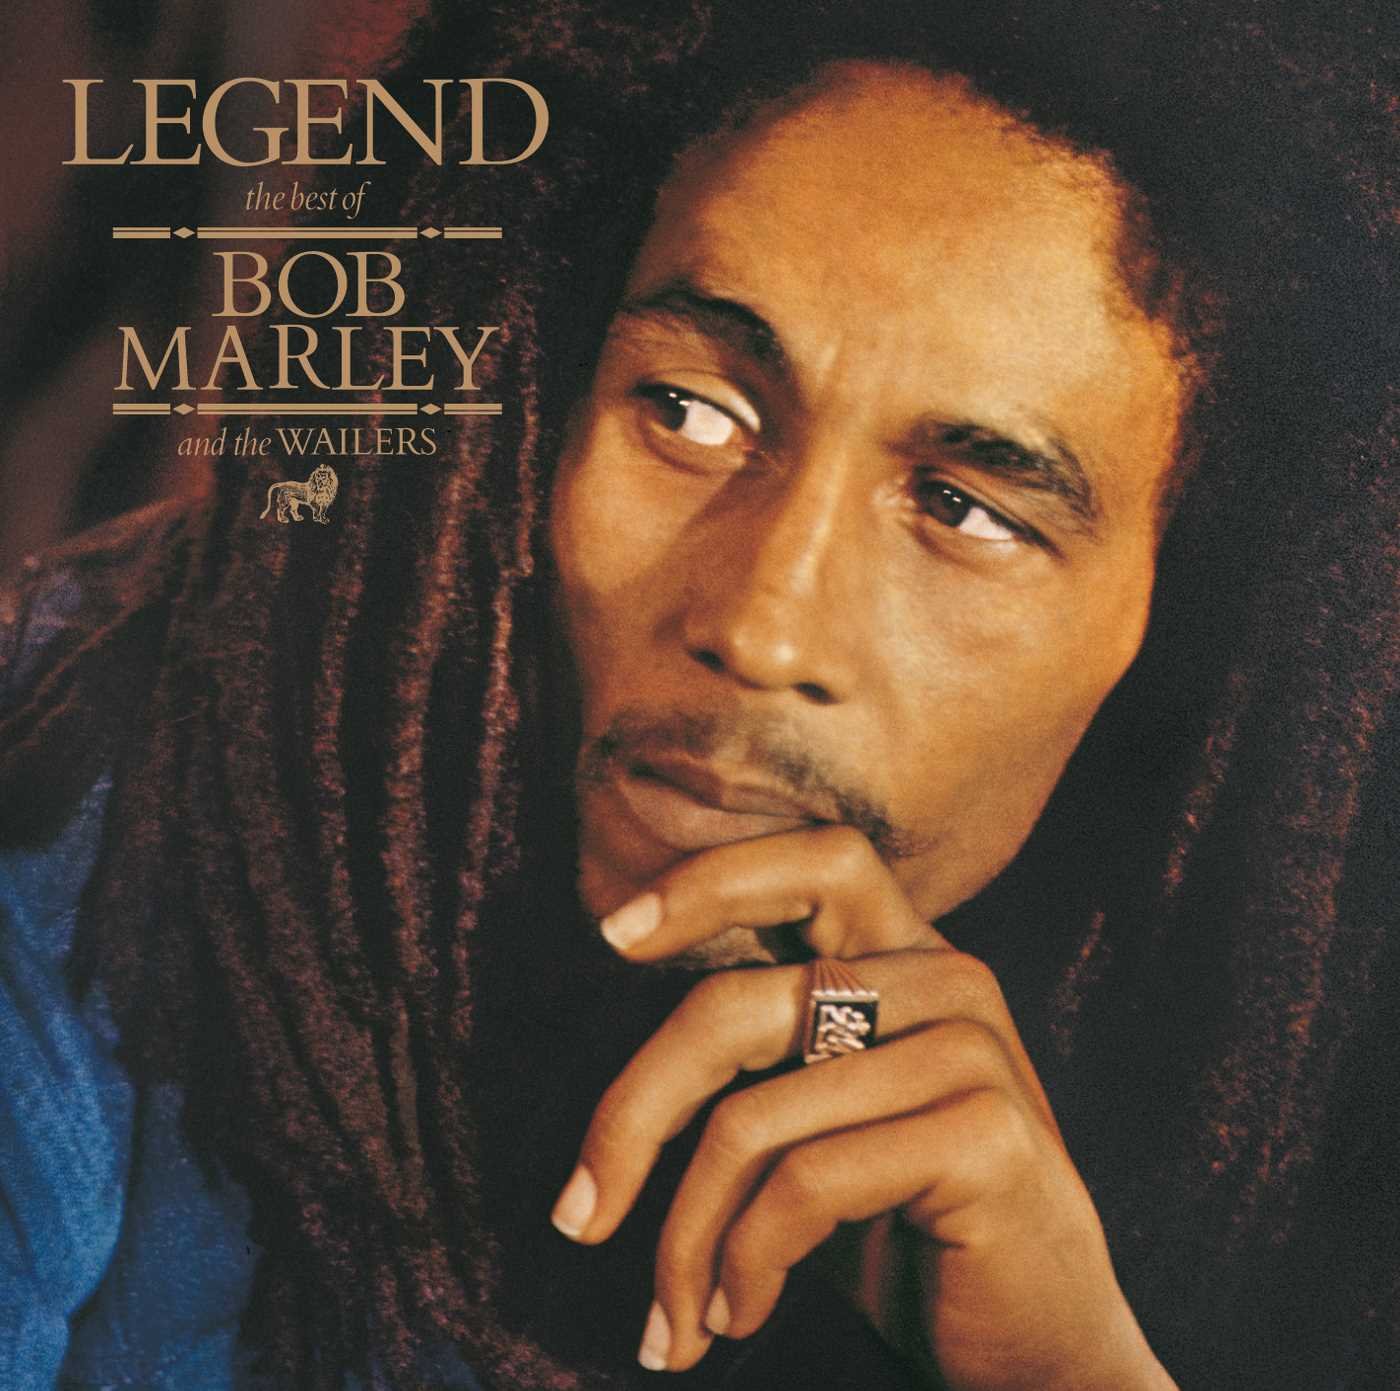 Bob Marley "Legend" LP